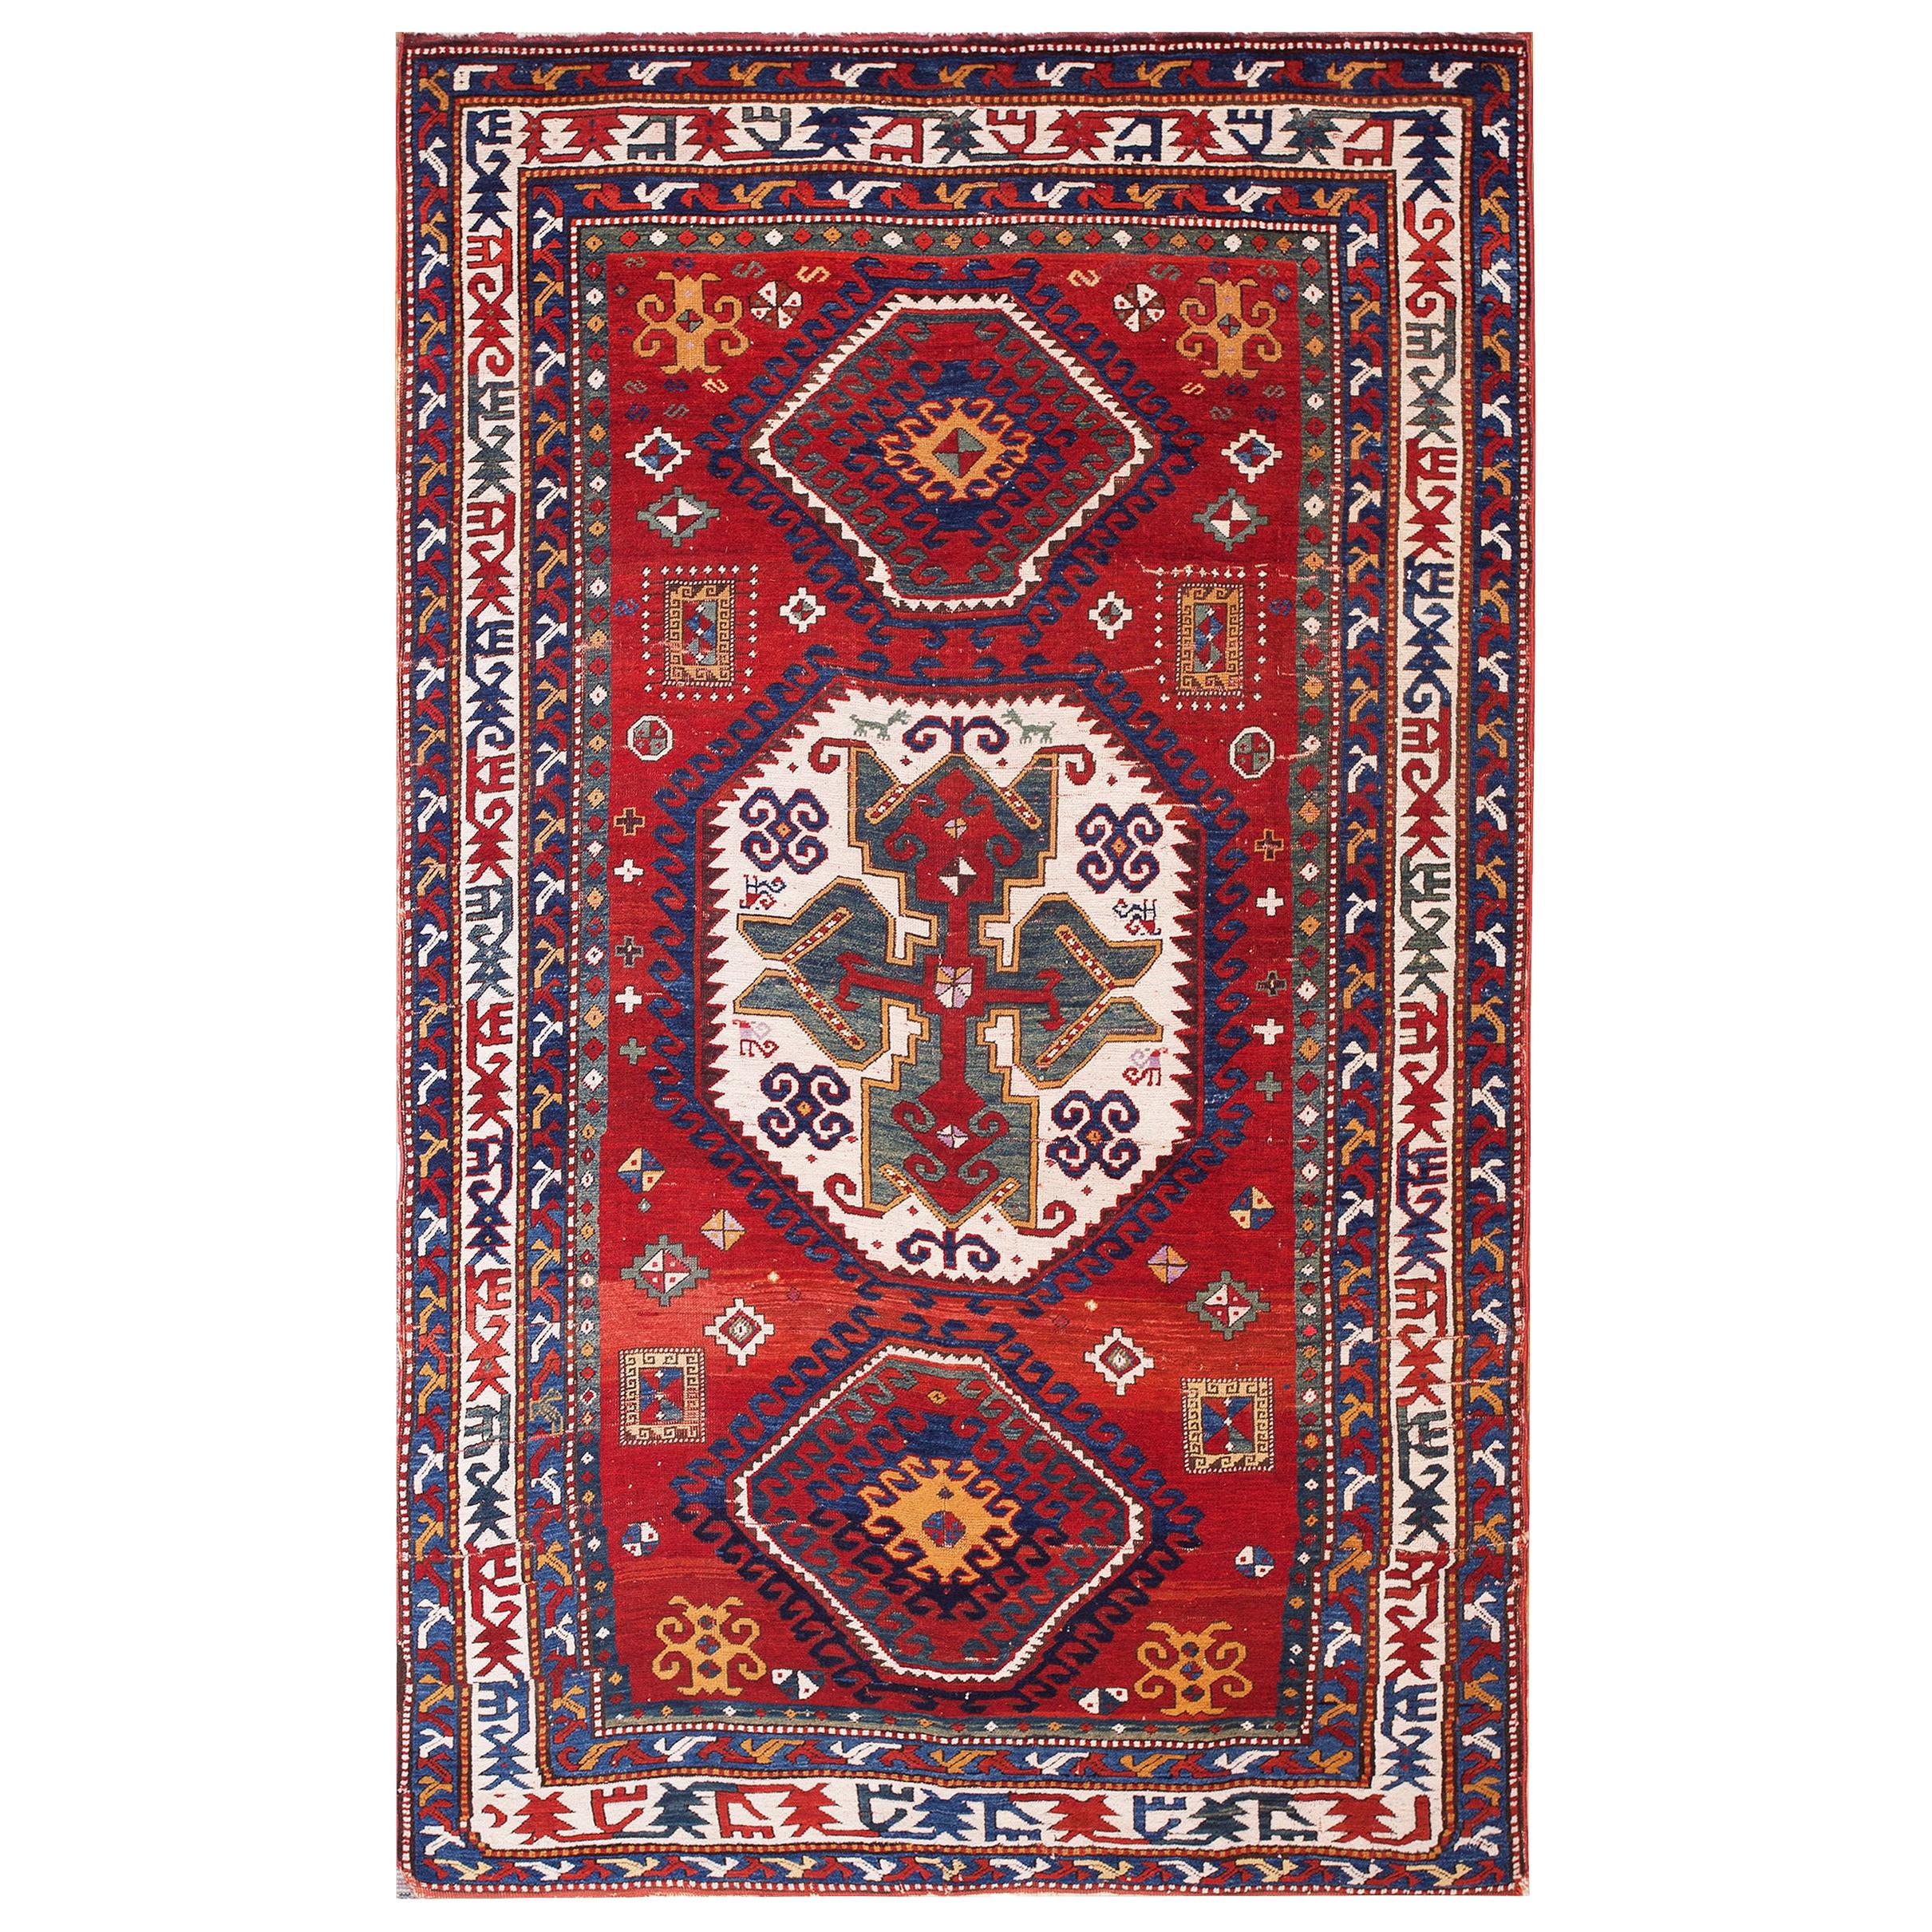 Kaukasischer Kazak Lori Pambak Teppich aus dem 19. Jahrhundert (5'8" x 9'9" - 173 x 297)